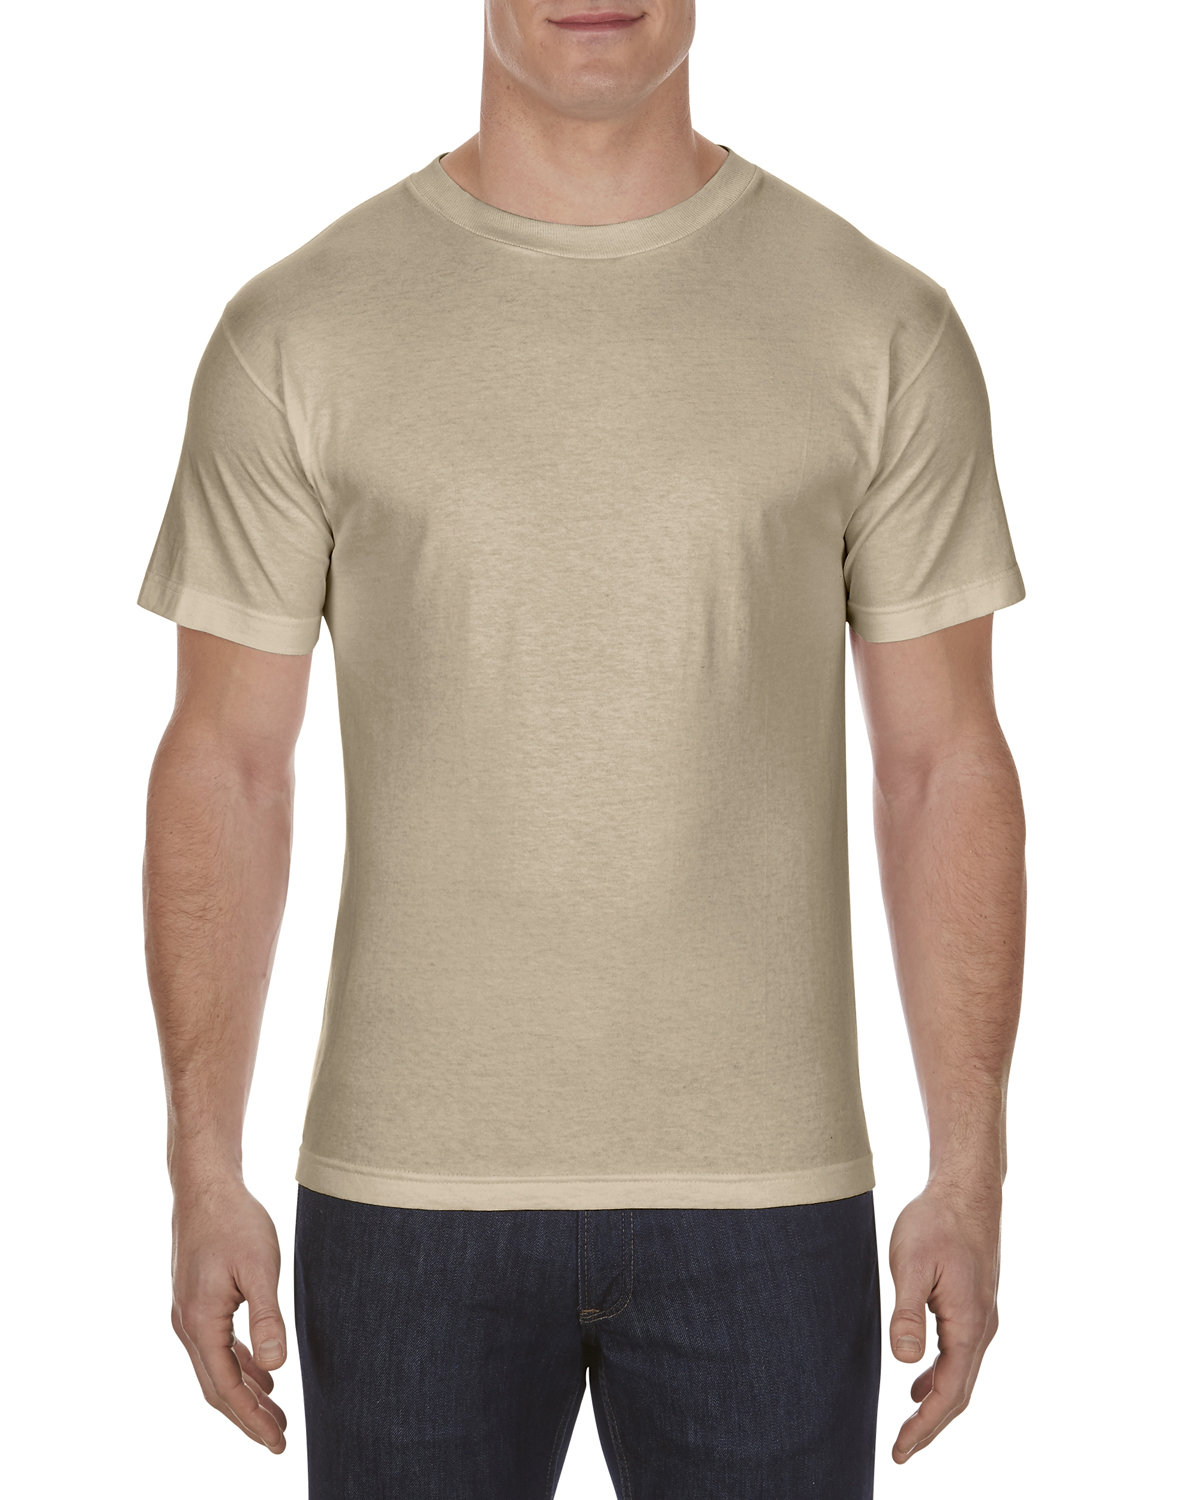 American Apparel Adult 6.0 oz., 100% Cotton T-Shirt SAND 